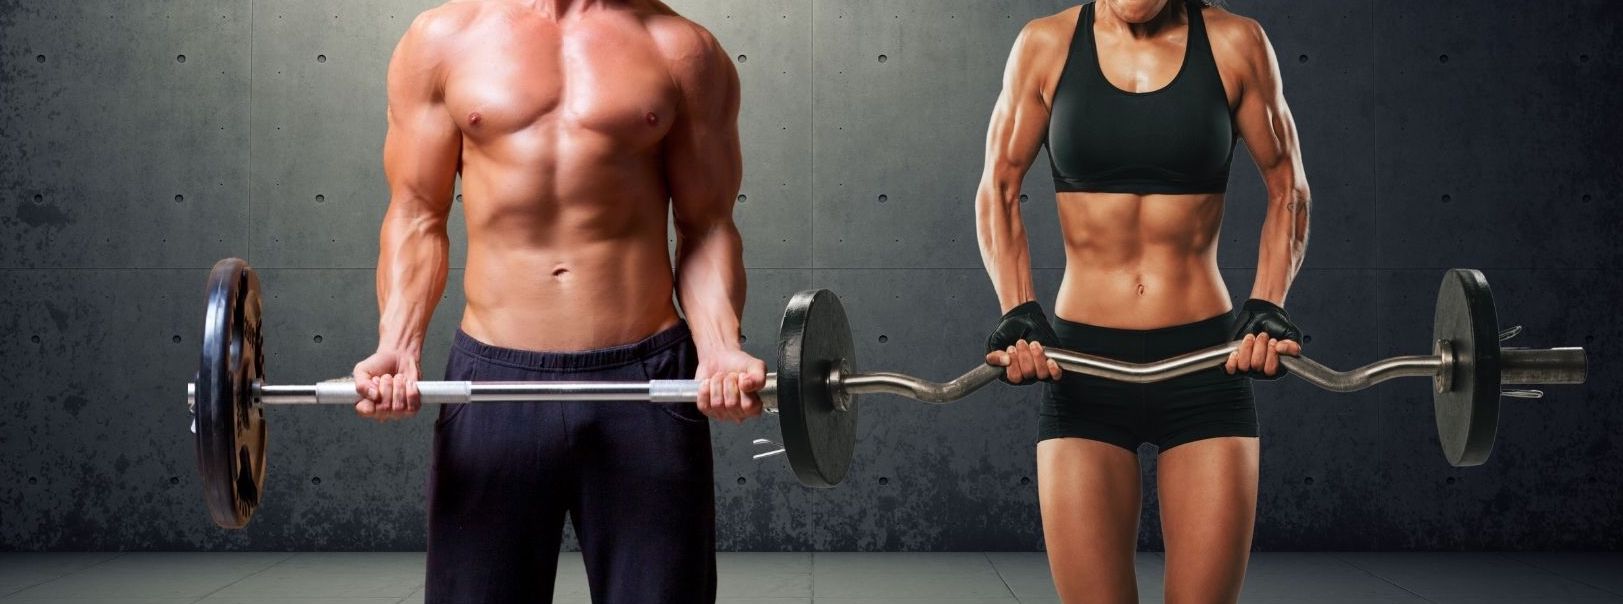 Muskulöser Mann und muskulöse Frau